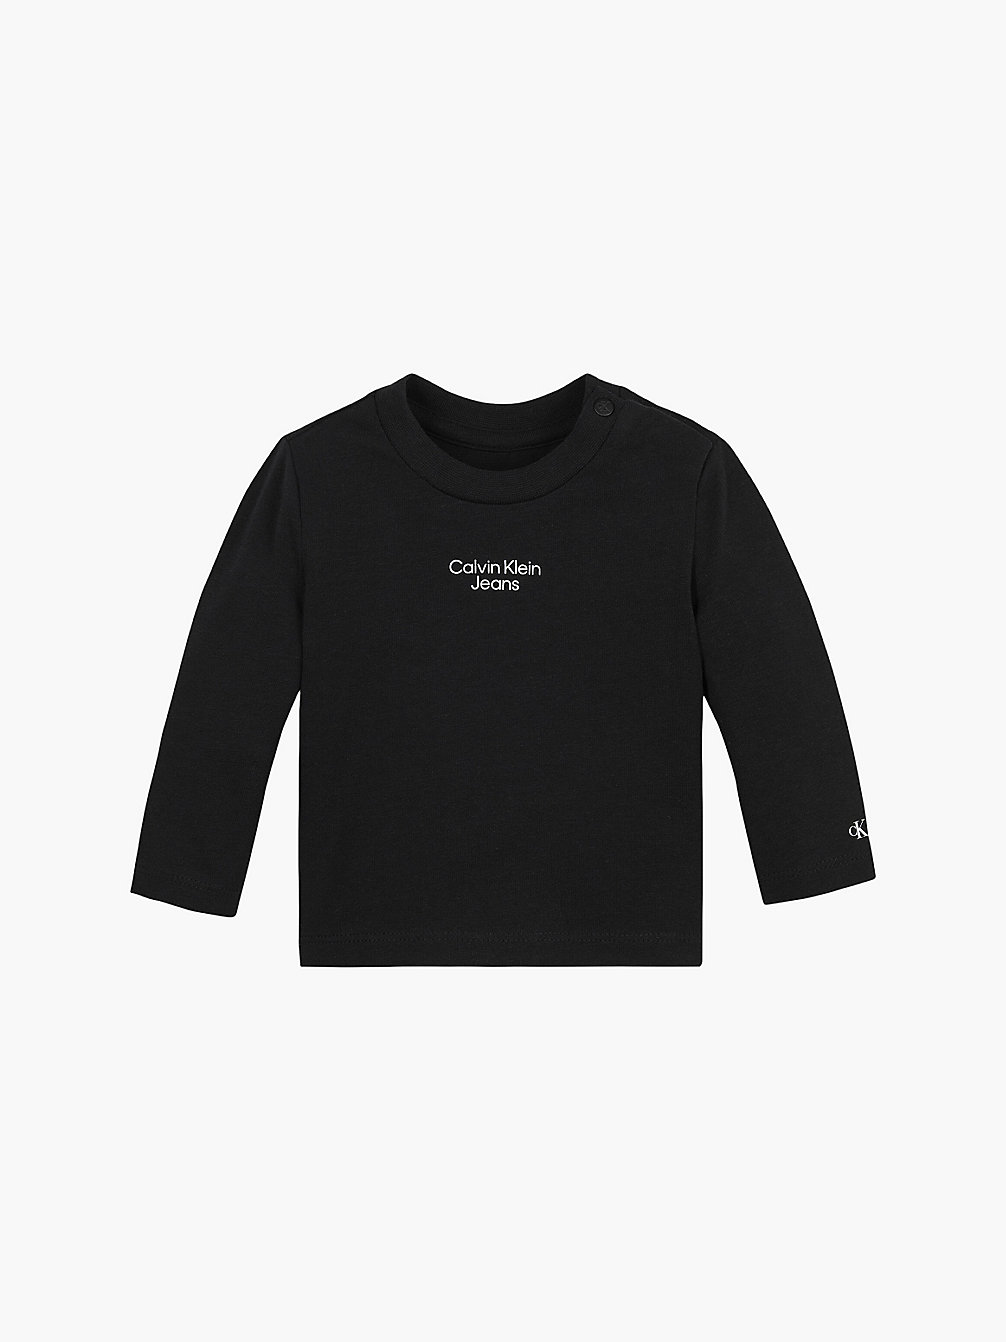 CK BLACK Newborn Long Sleeve T-Shirt undefined newborn Calvin Klein